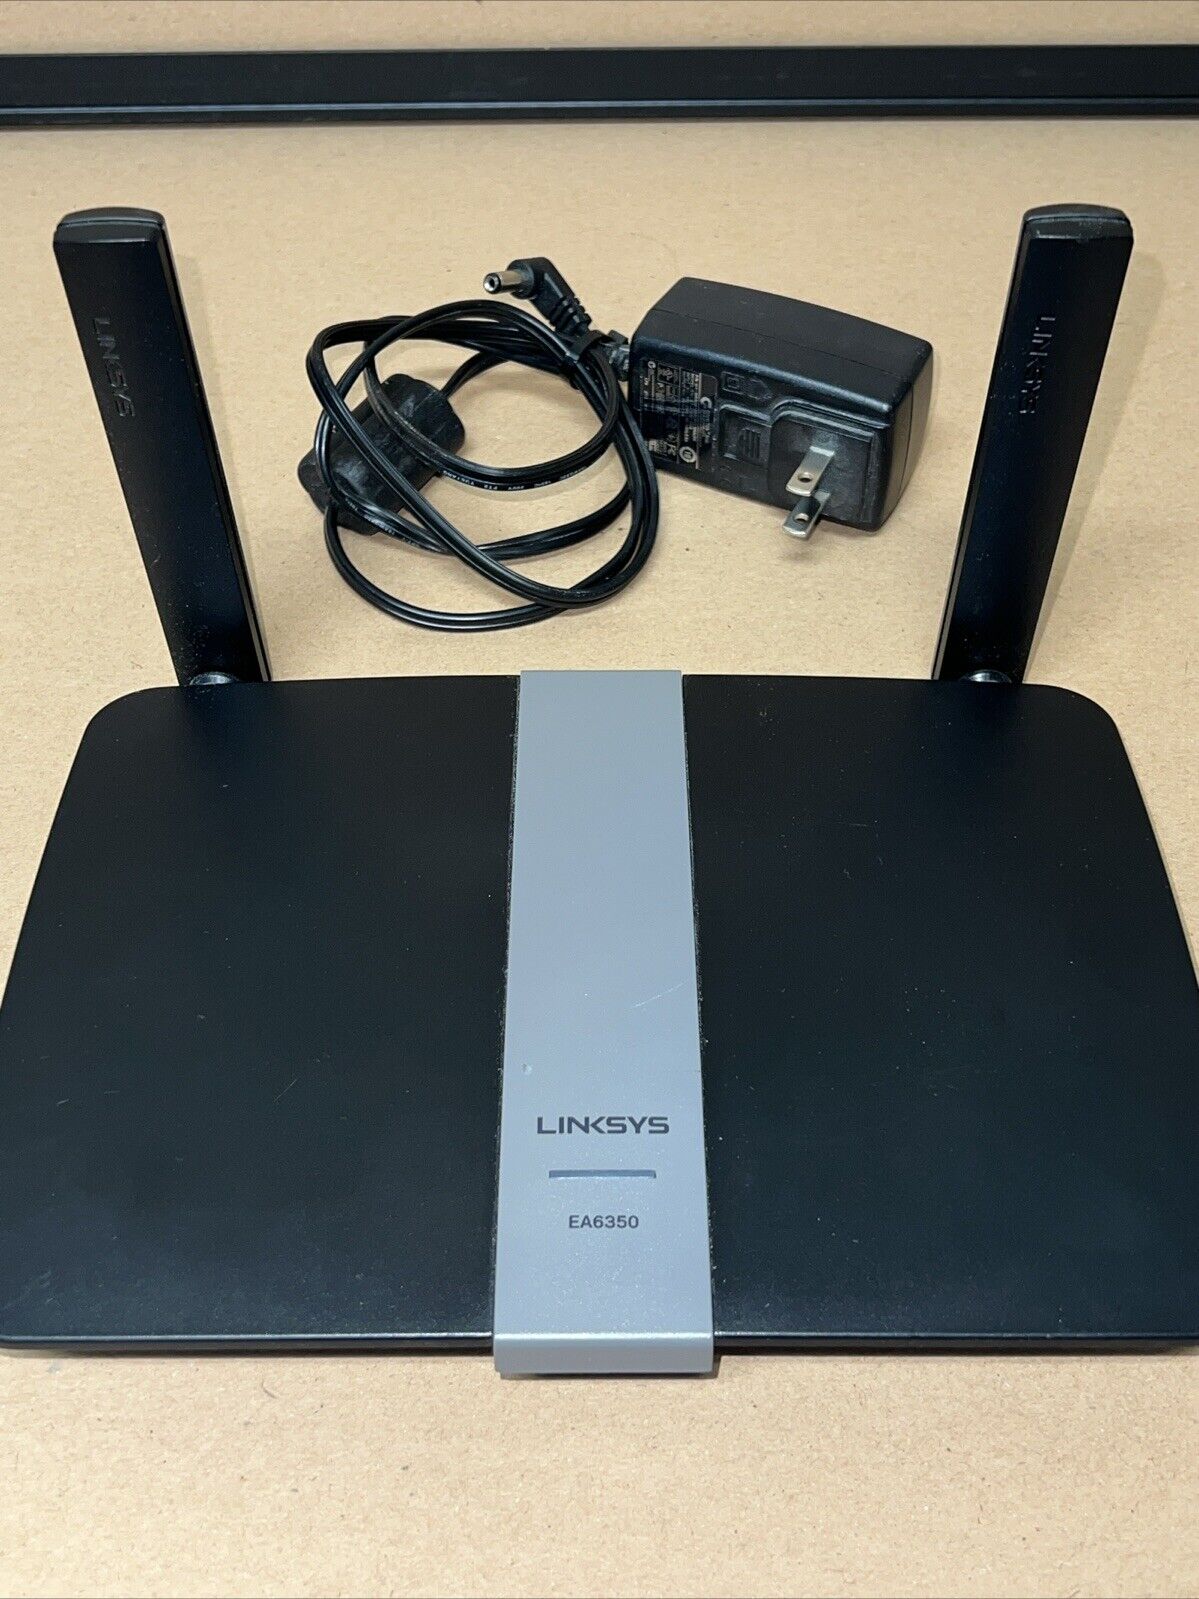 LINKSYS EA6350 V3 Dual Band Smart WiFi Gigabit Router 